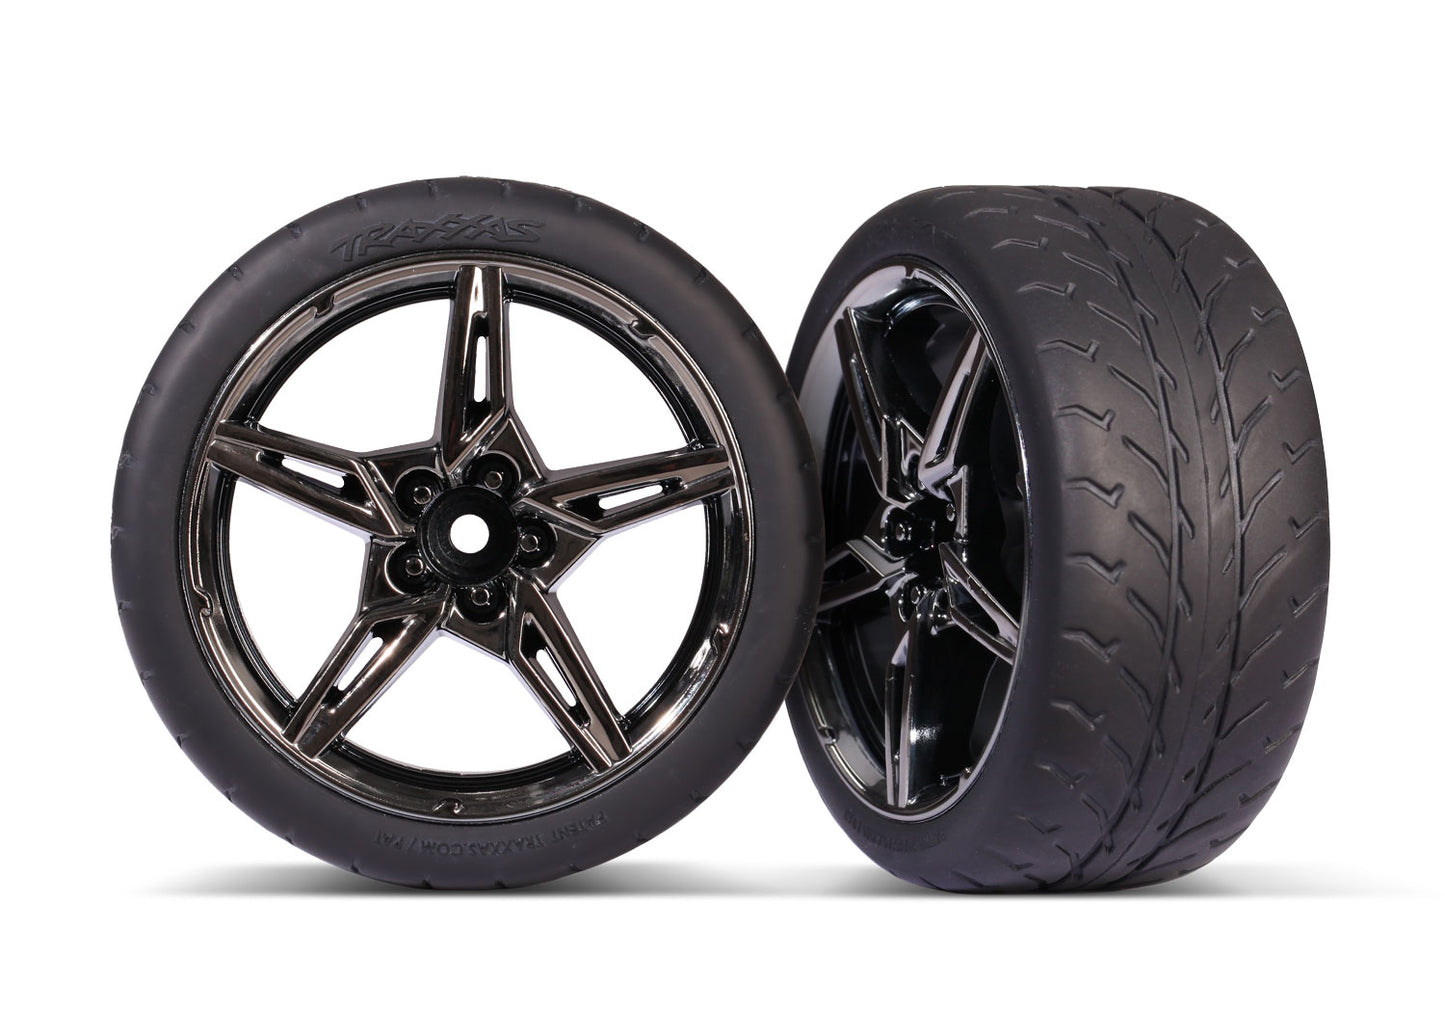 Tires & wheels, assembled, glued (split-spoke black chrome wheels, 2.1" Response tires) (extra wide, rear) (2)